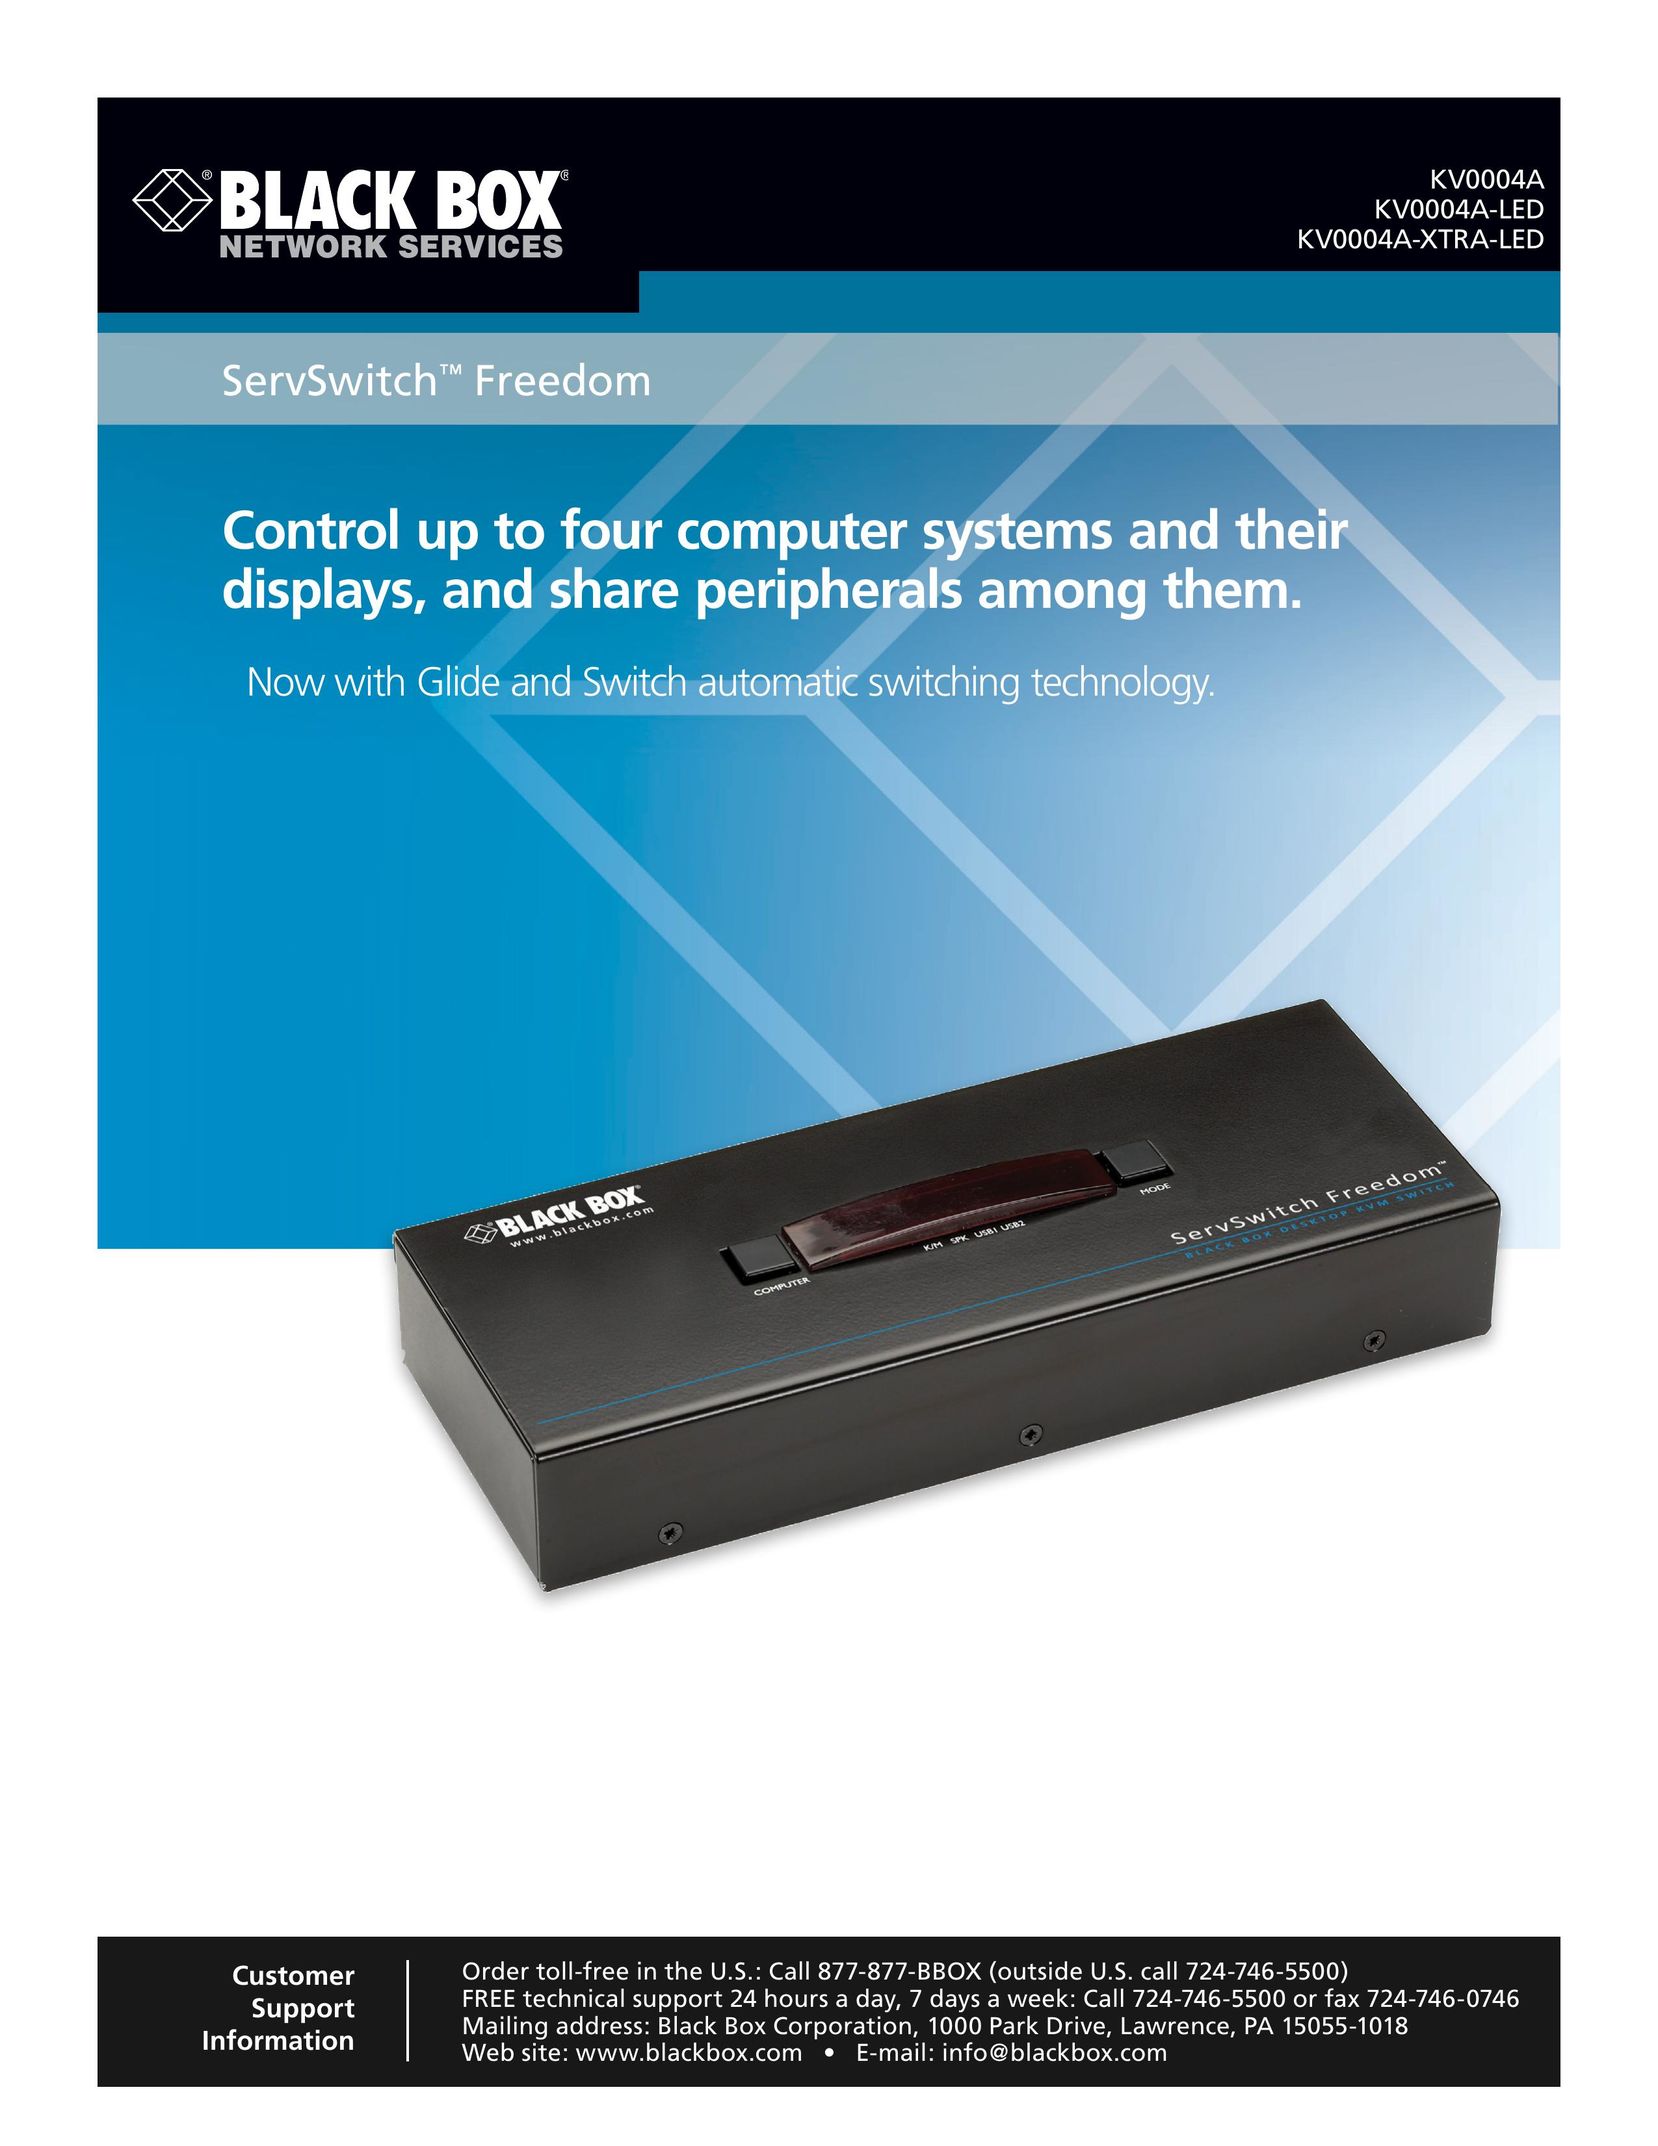 Black Box KV0004A-LED Computer Accessories User Manual